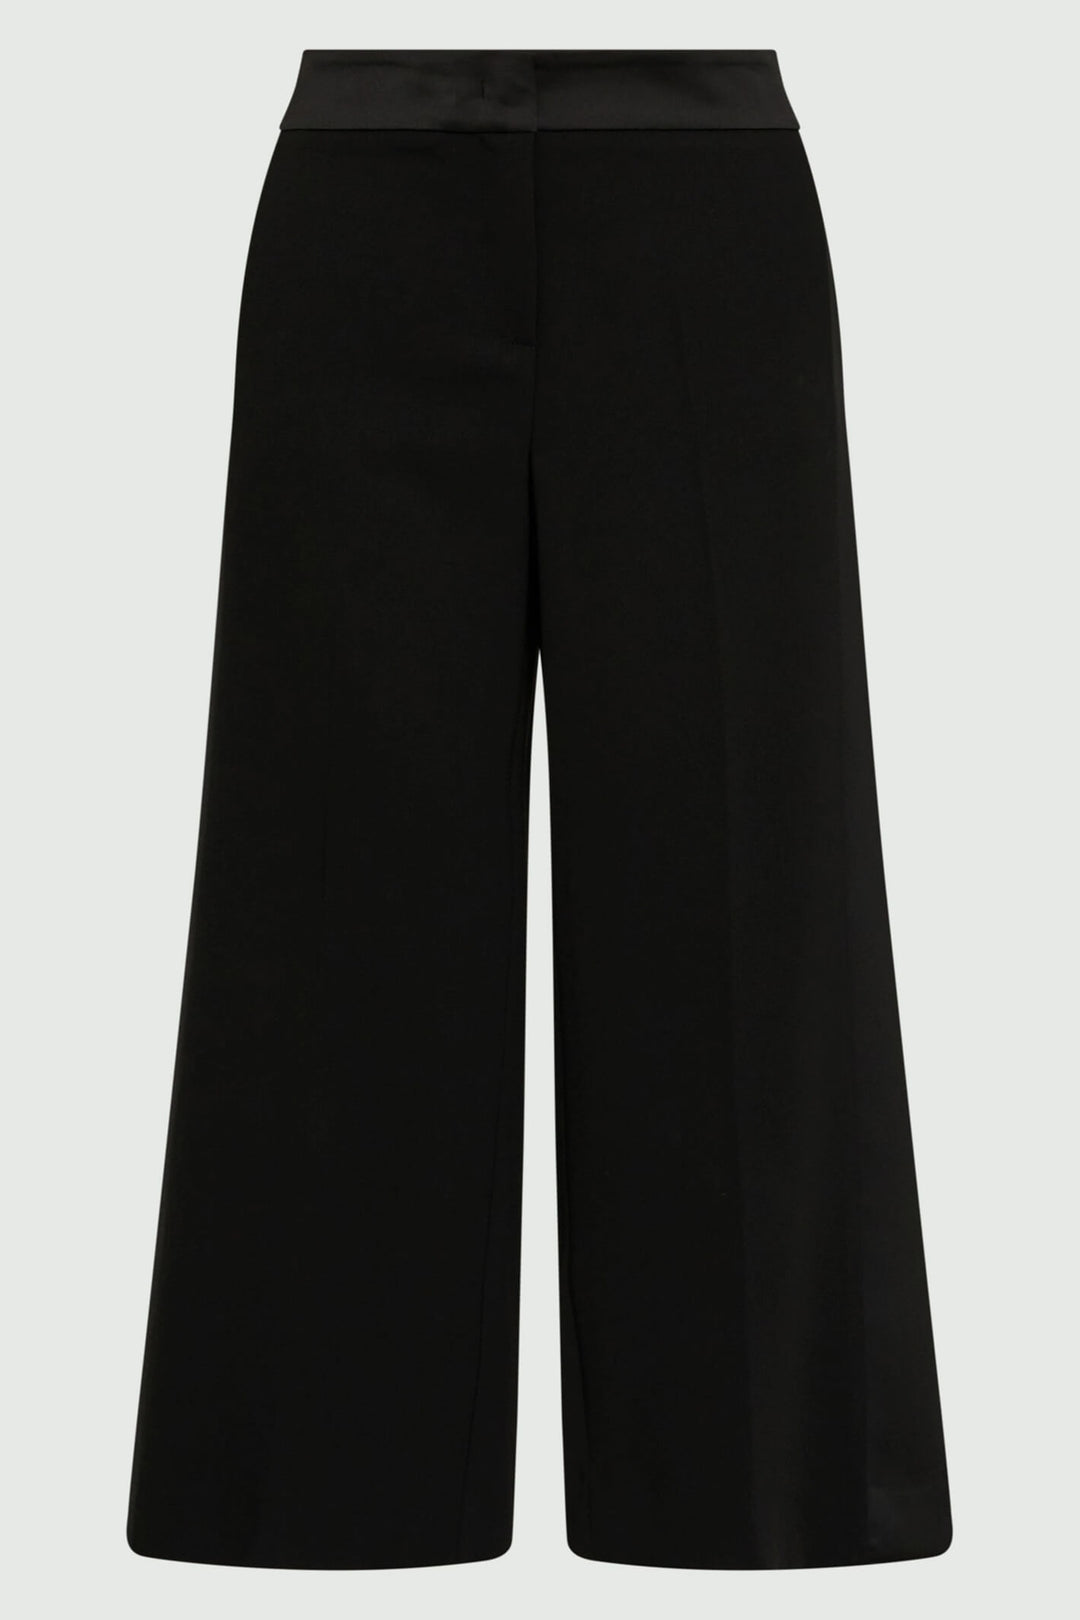 Marella Grace 23313603332 Black Art 365 Cropped Trousers - Olivia Grace Fashion